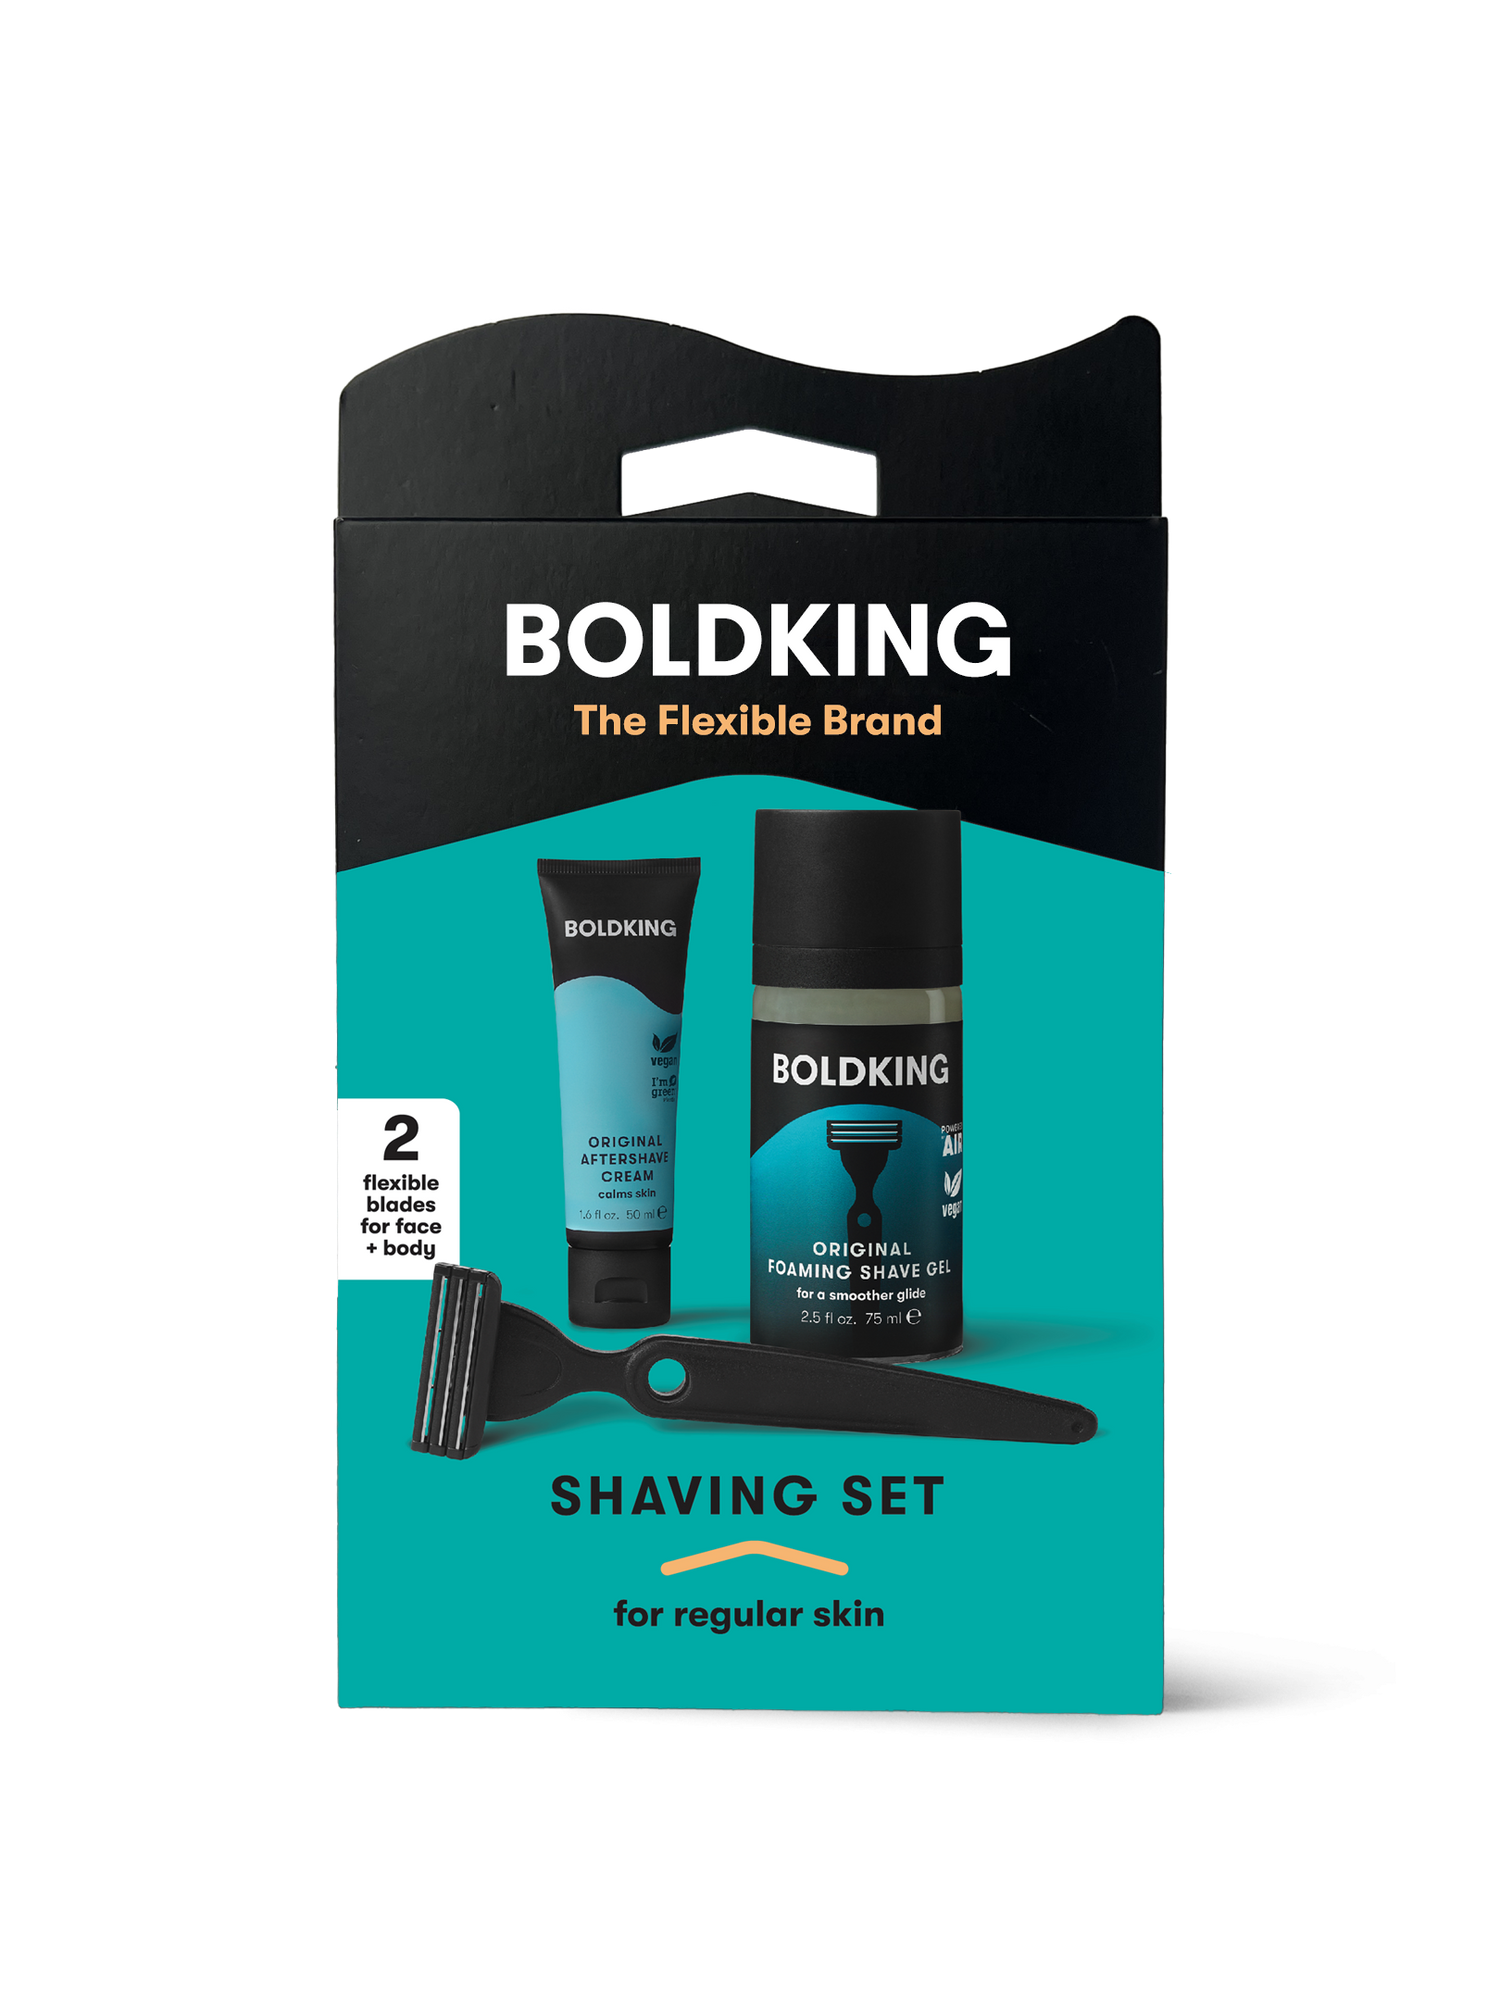 Shaving sets